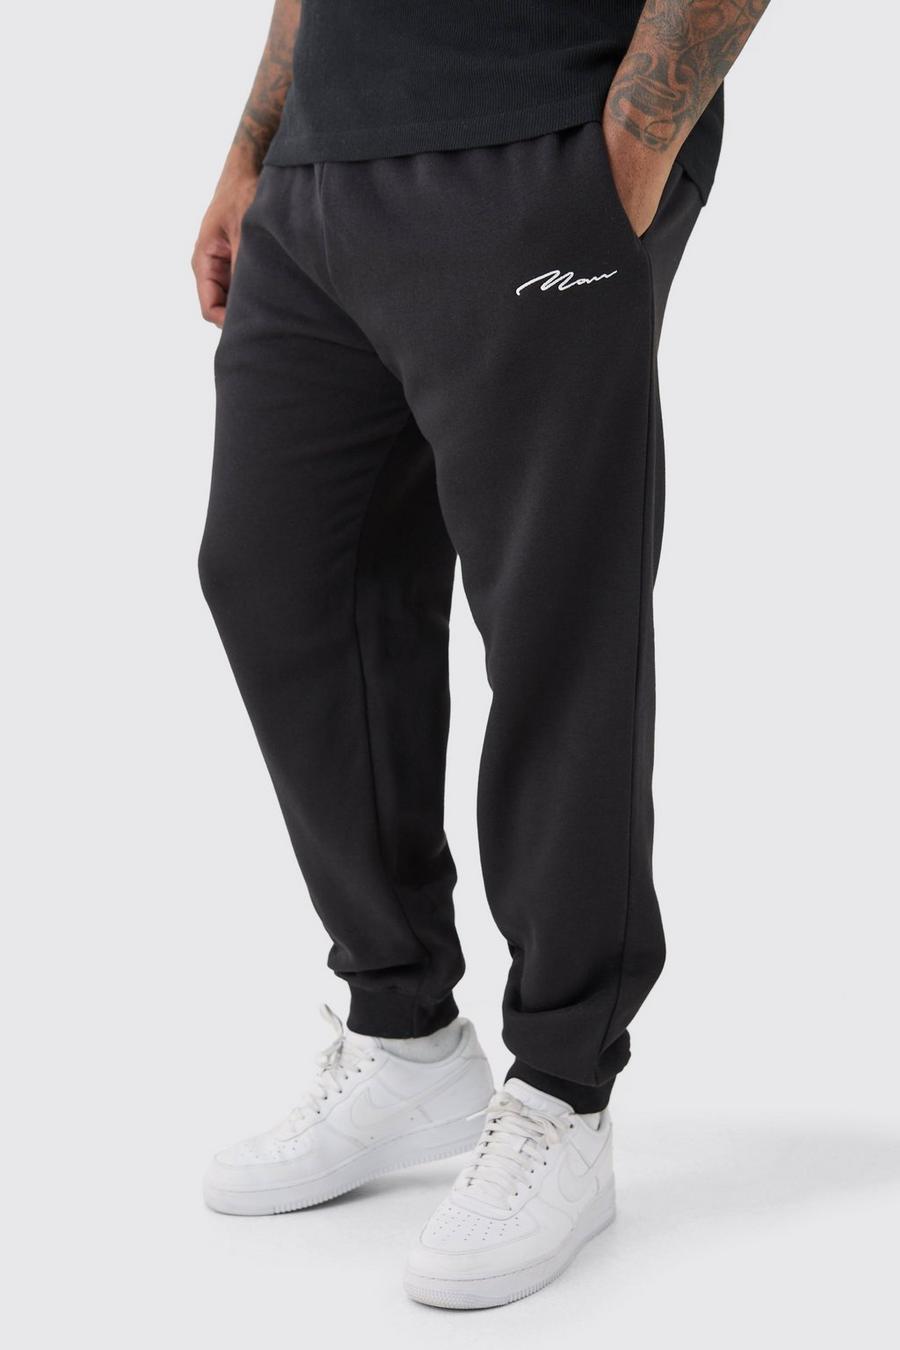 Pantaloni tuta Plus Size neri Slim Fit con firma Man, Black